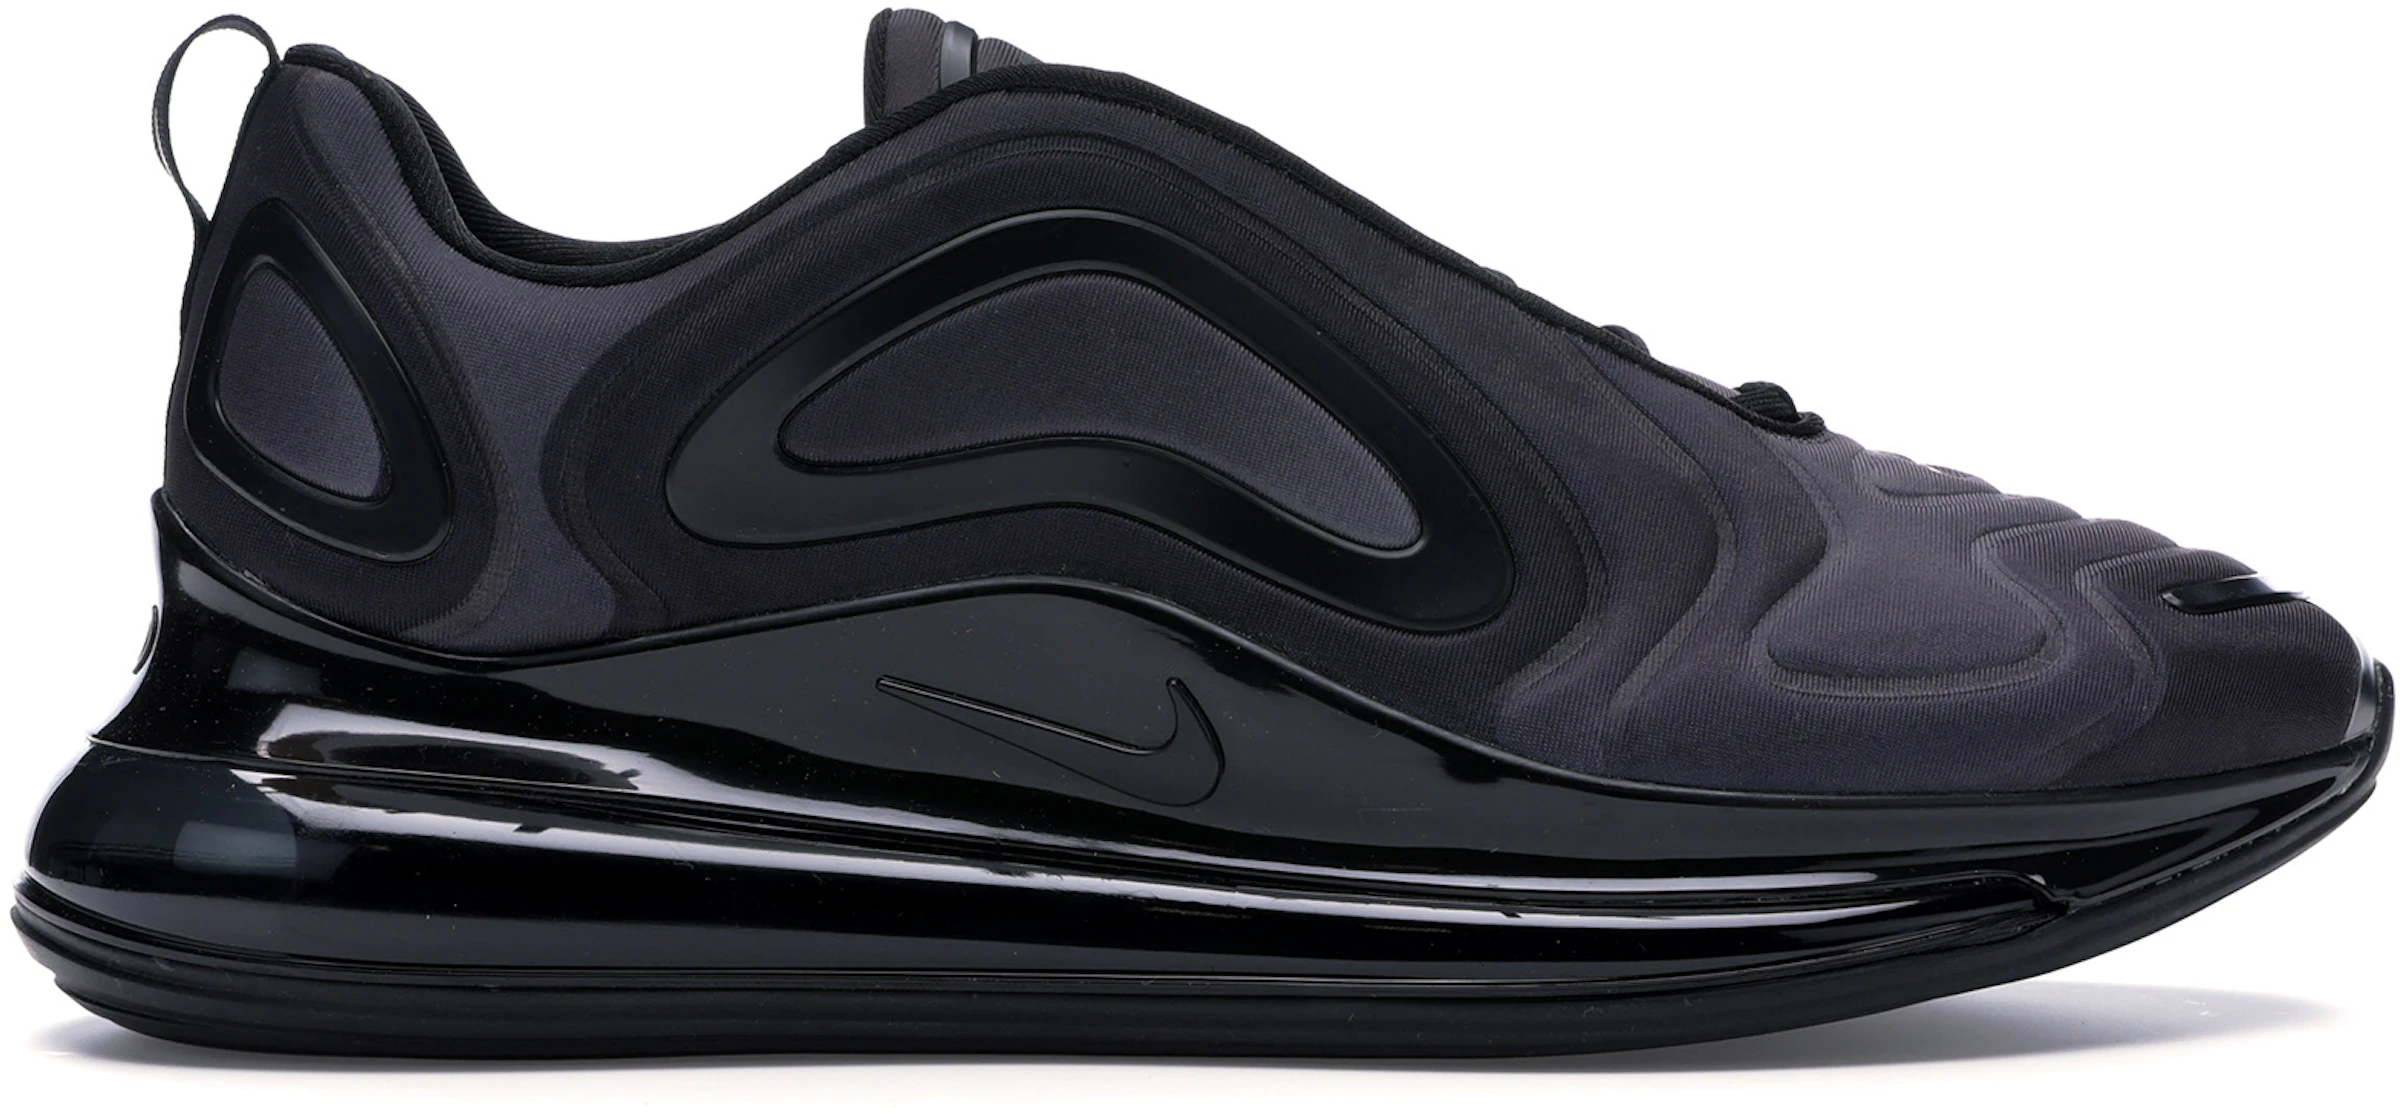 Compra Nike Air Max 720 Calzado y sneakers -